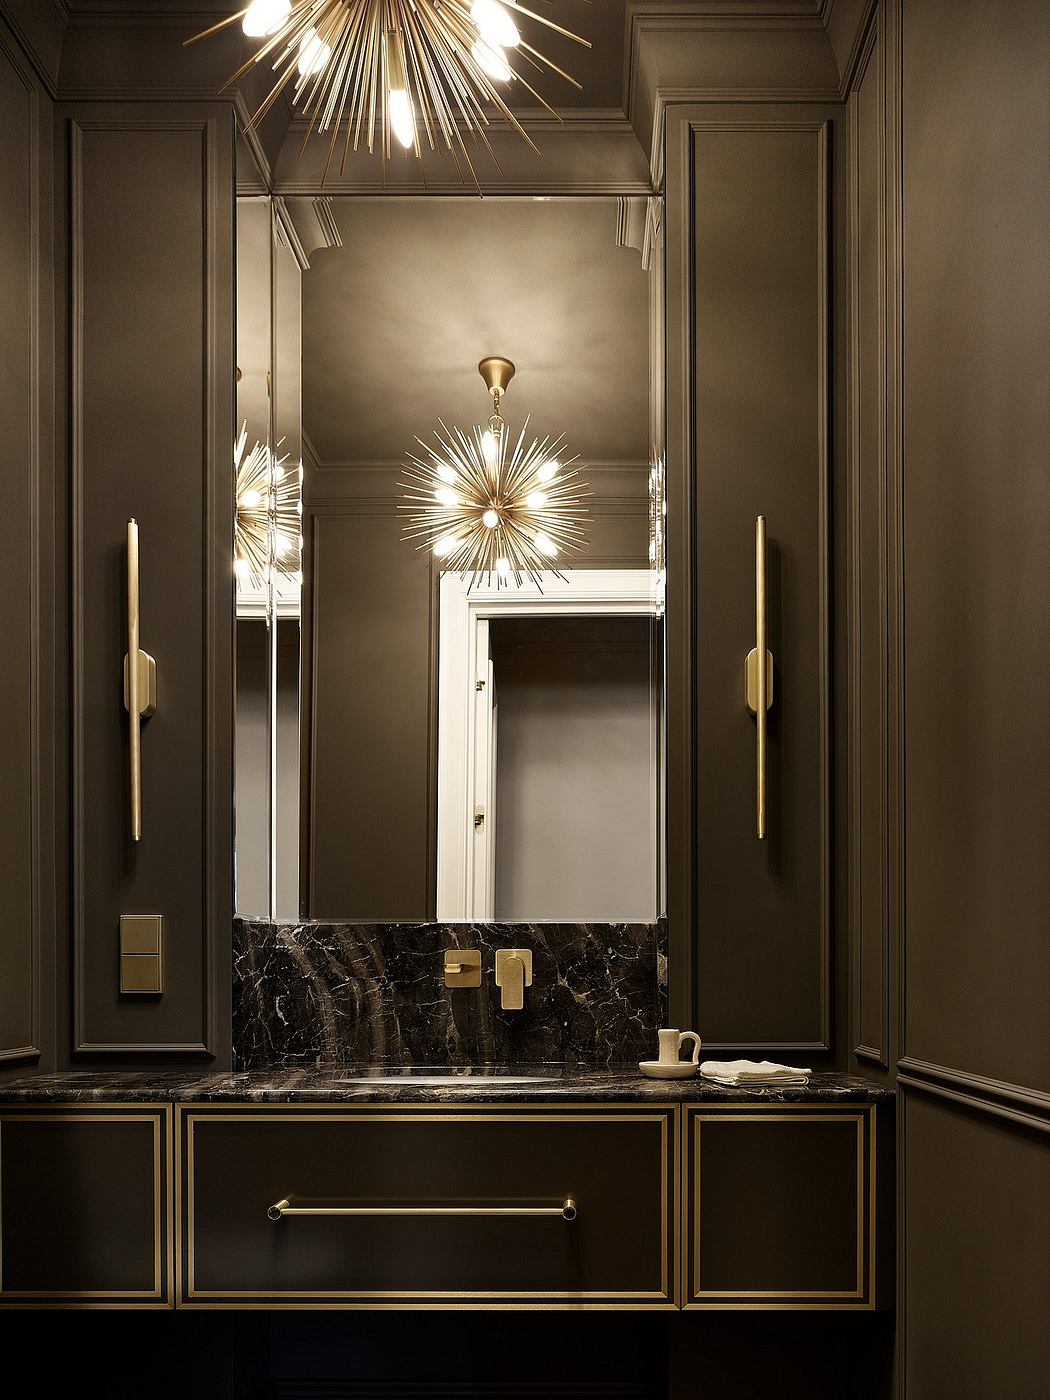 Opulent bathroom interior with elegant gold light fixtures, black marble vanity, and ornate mirror.